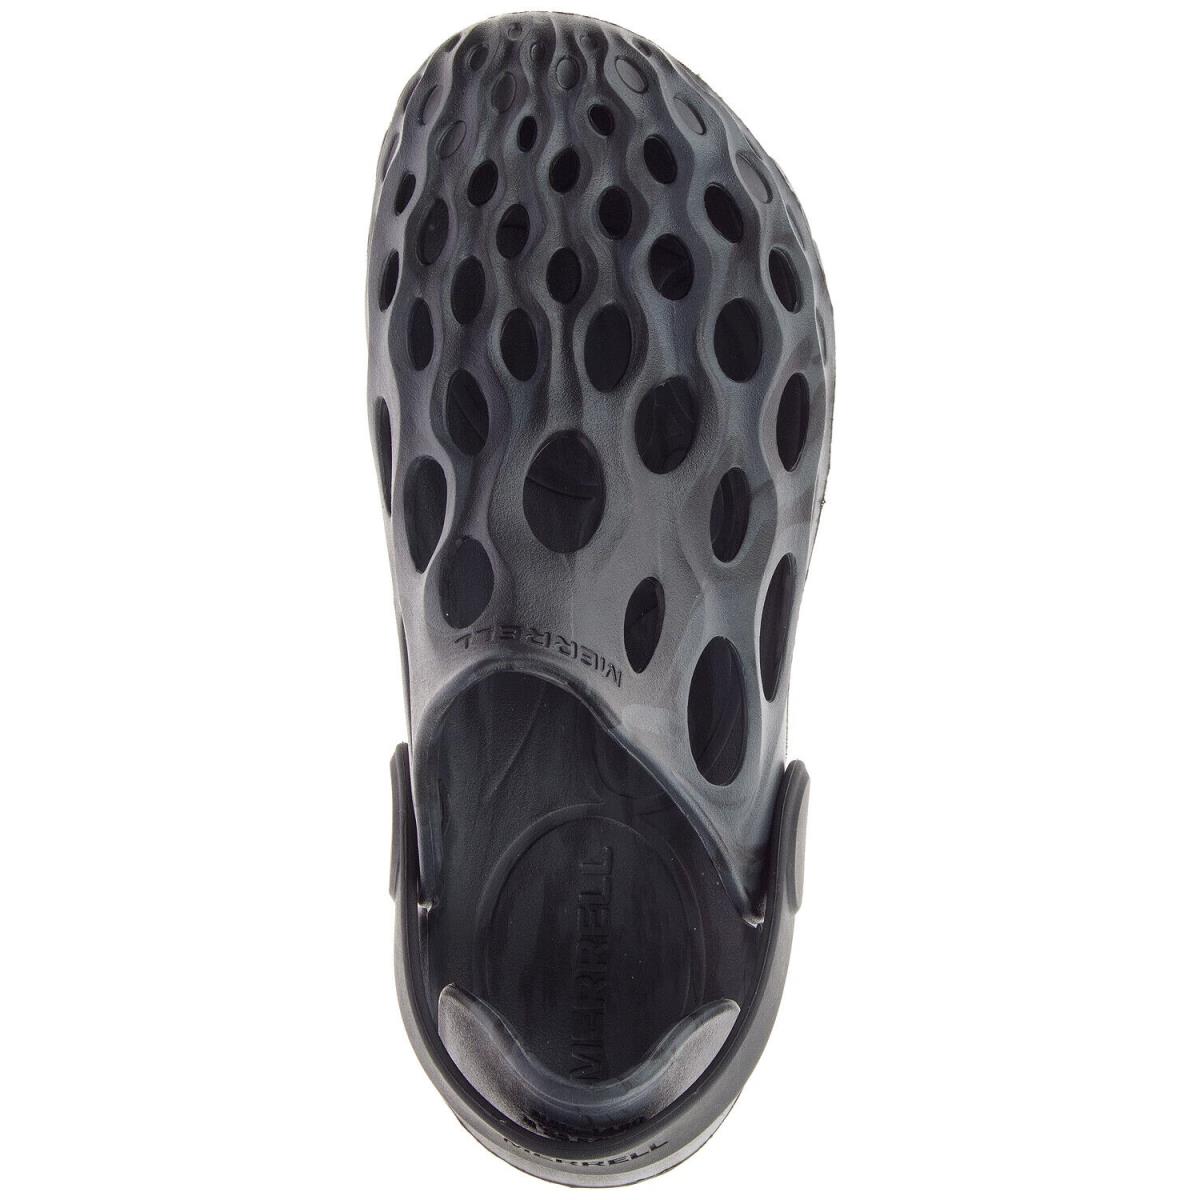 Merrell shoes Hydro Moc - Black 6